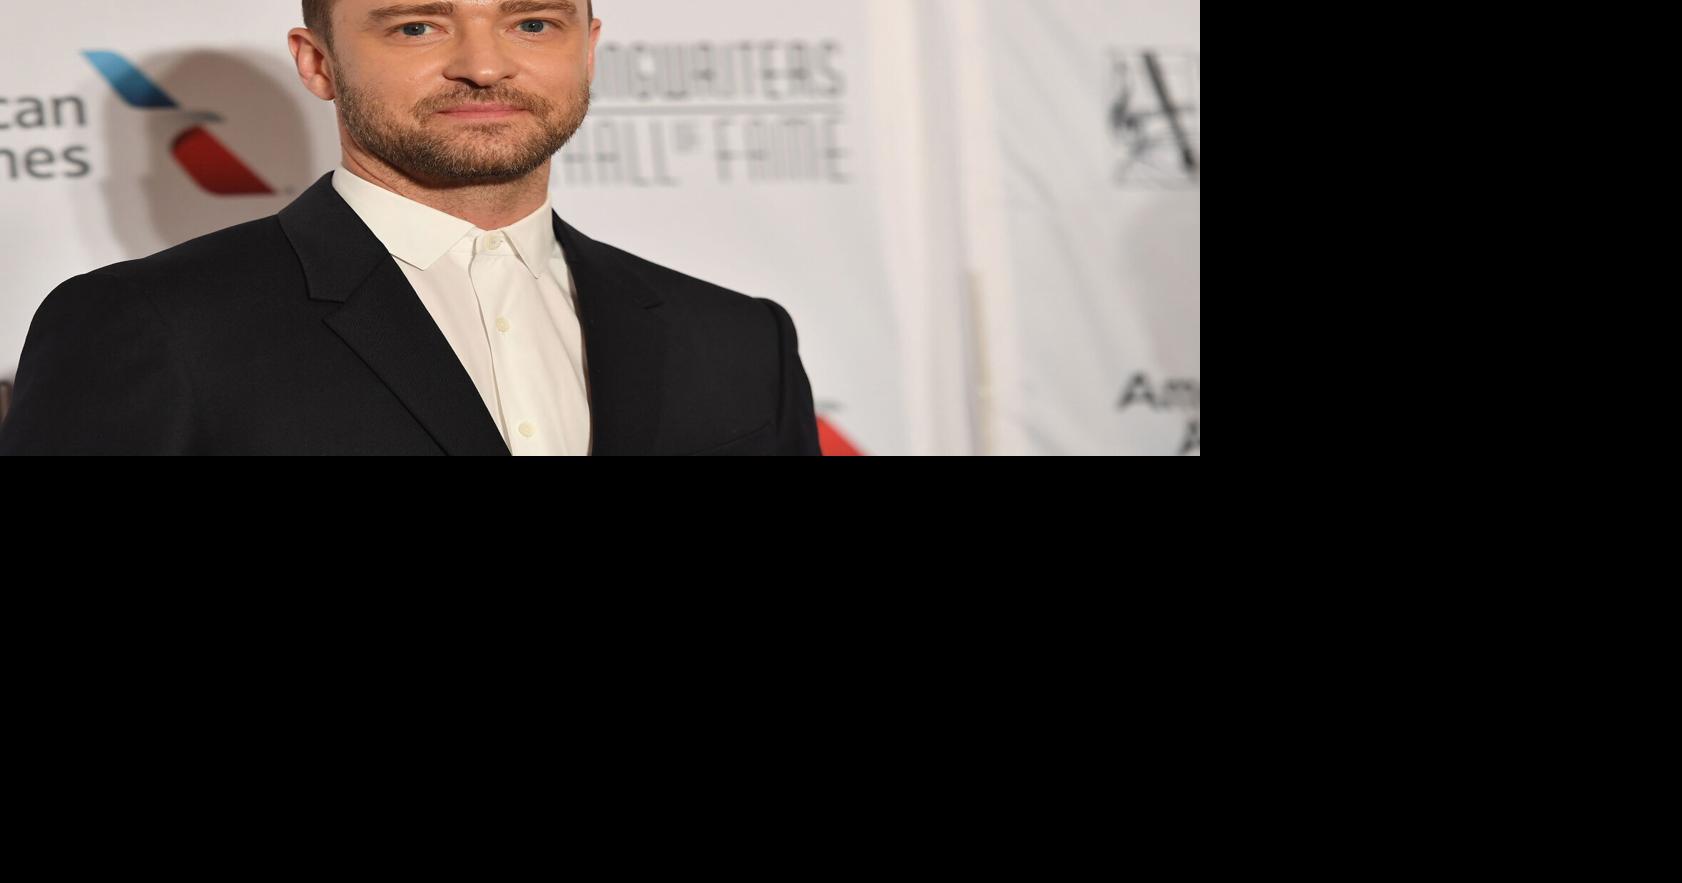 Justin Timberlake sells his song catalog for $100M